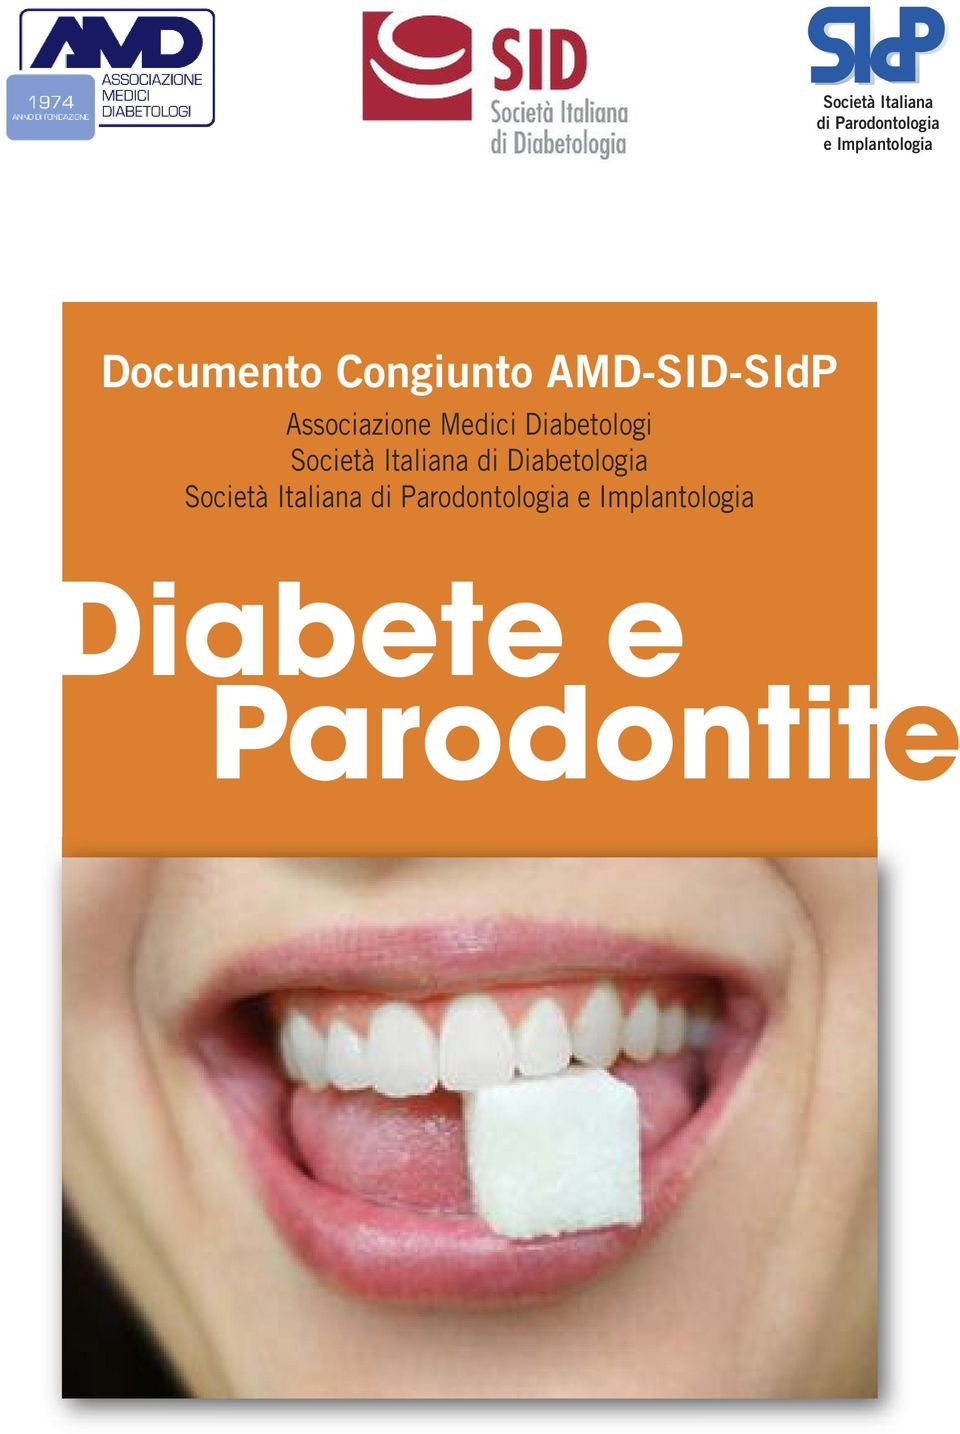 Diabetologi Società Italiana di Diabetologia 